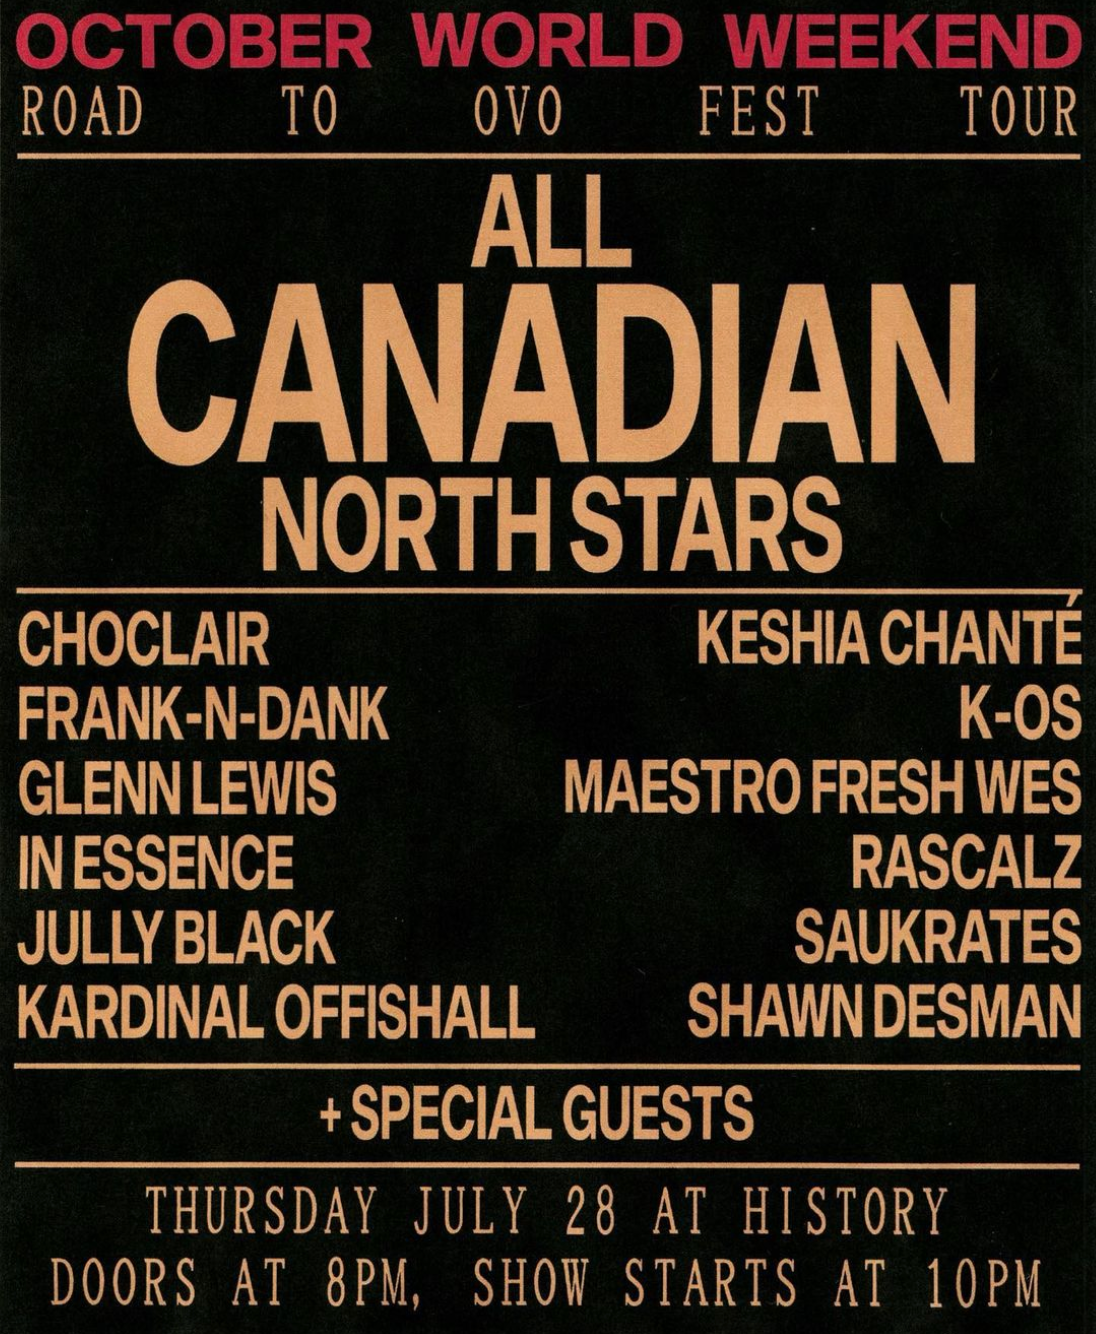 All Canadian Northstars